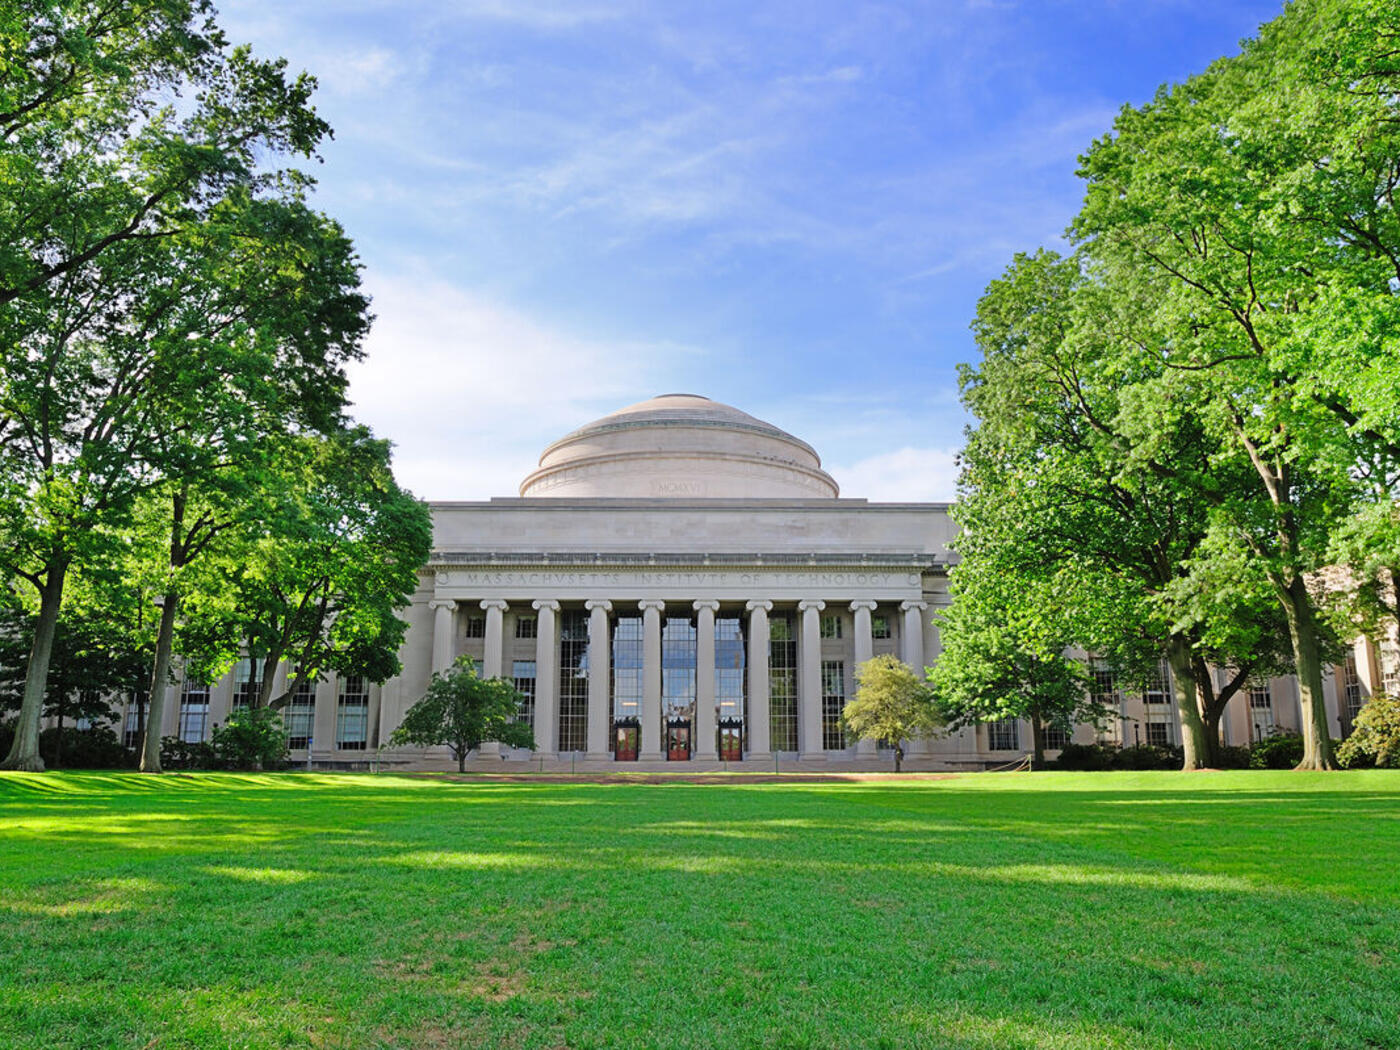 MIT dome and Killian court